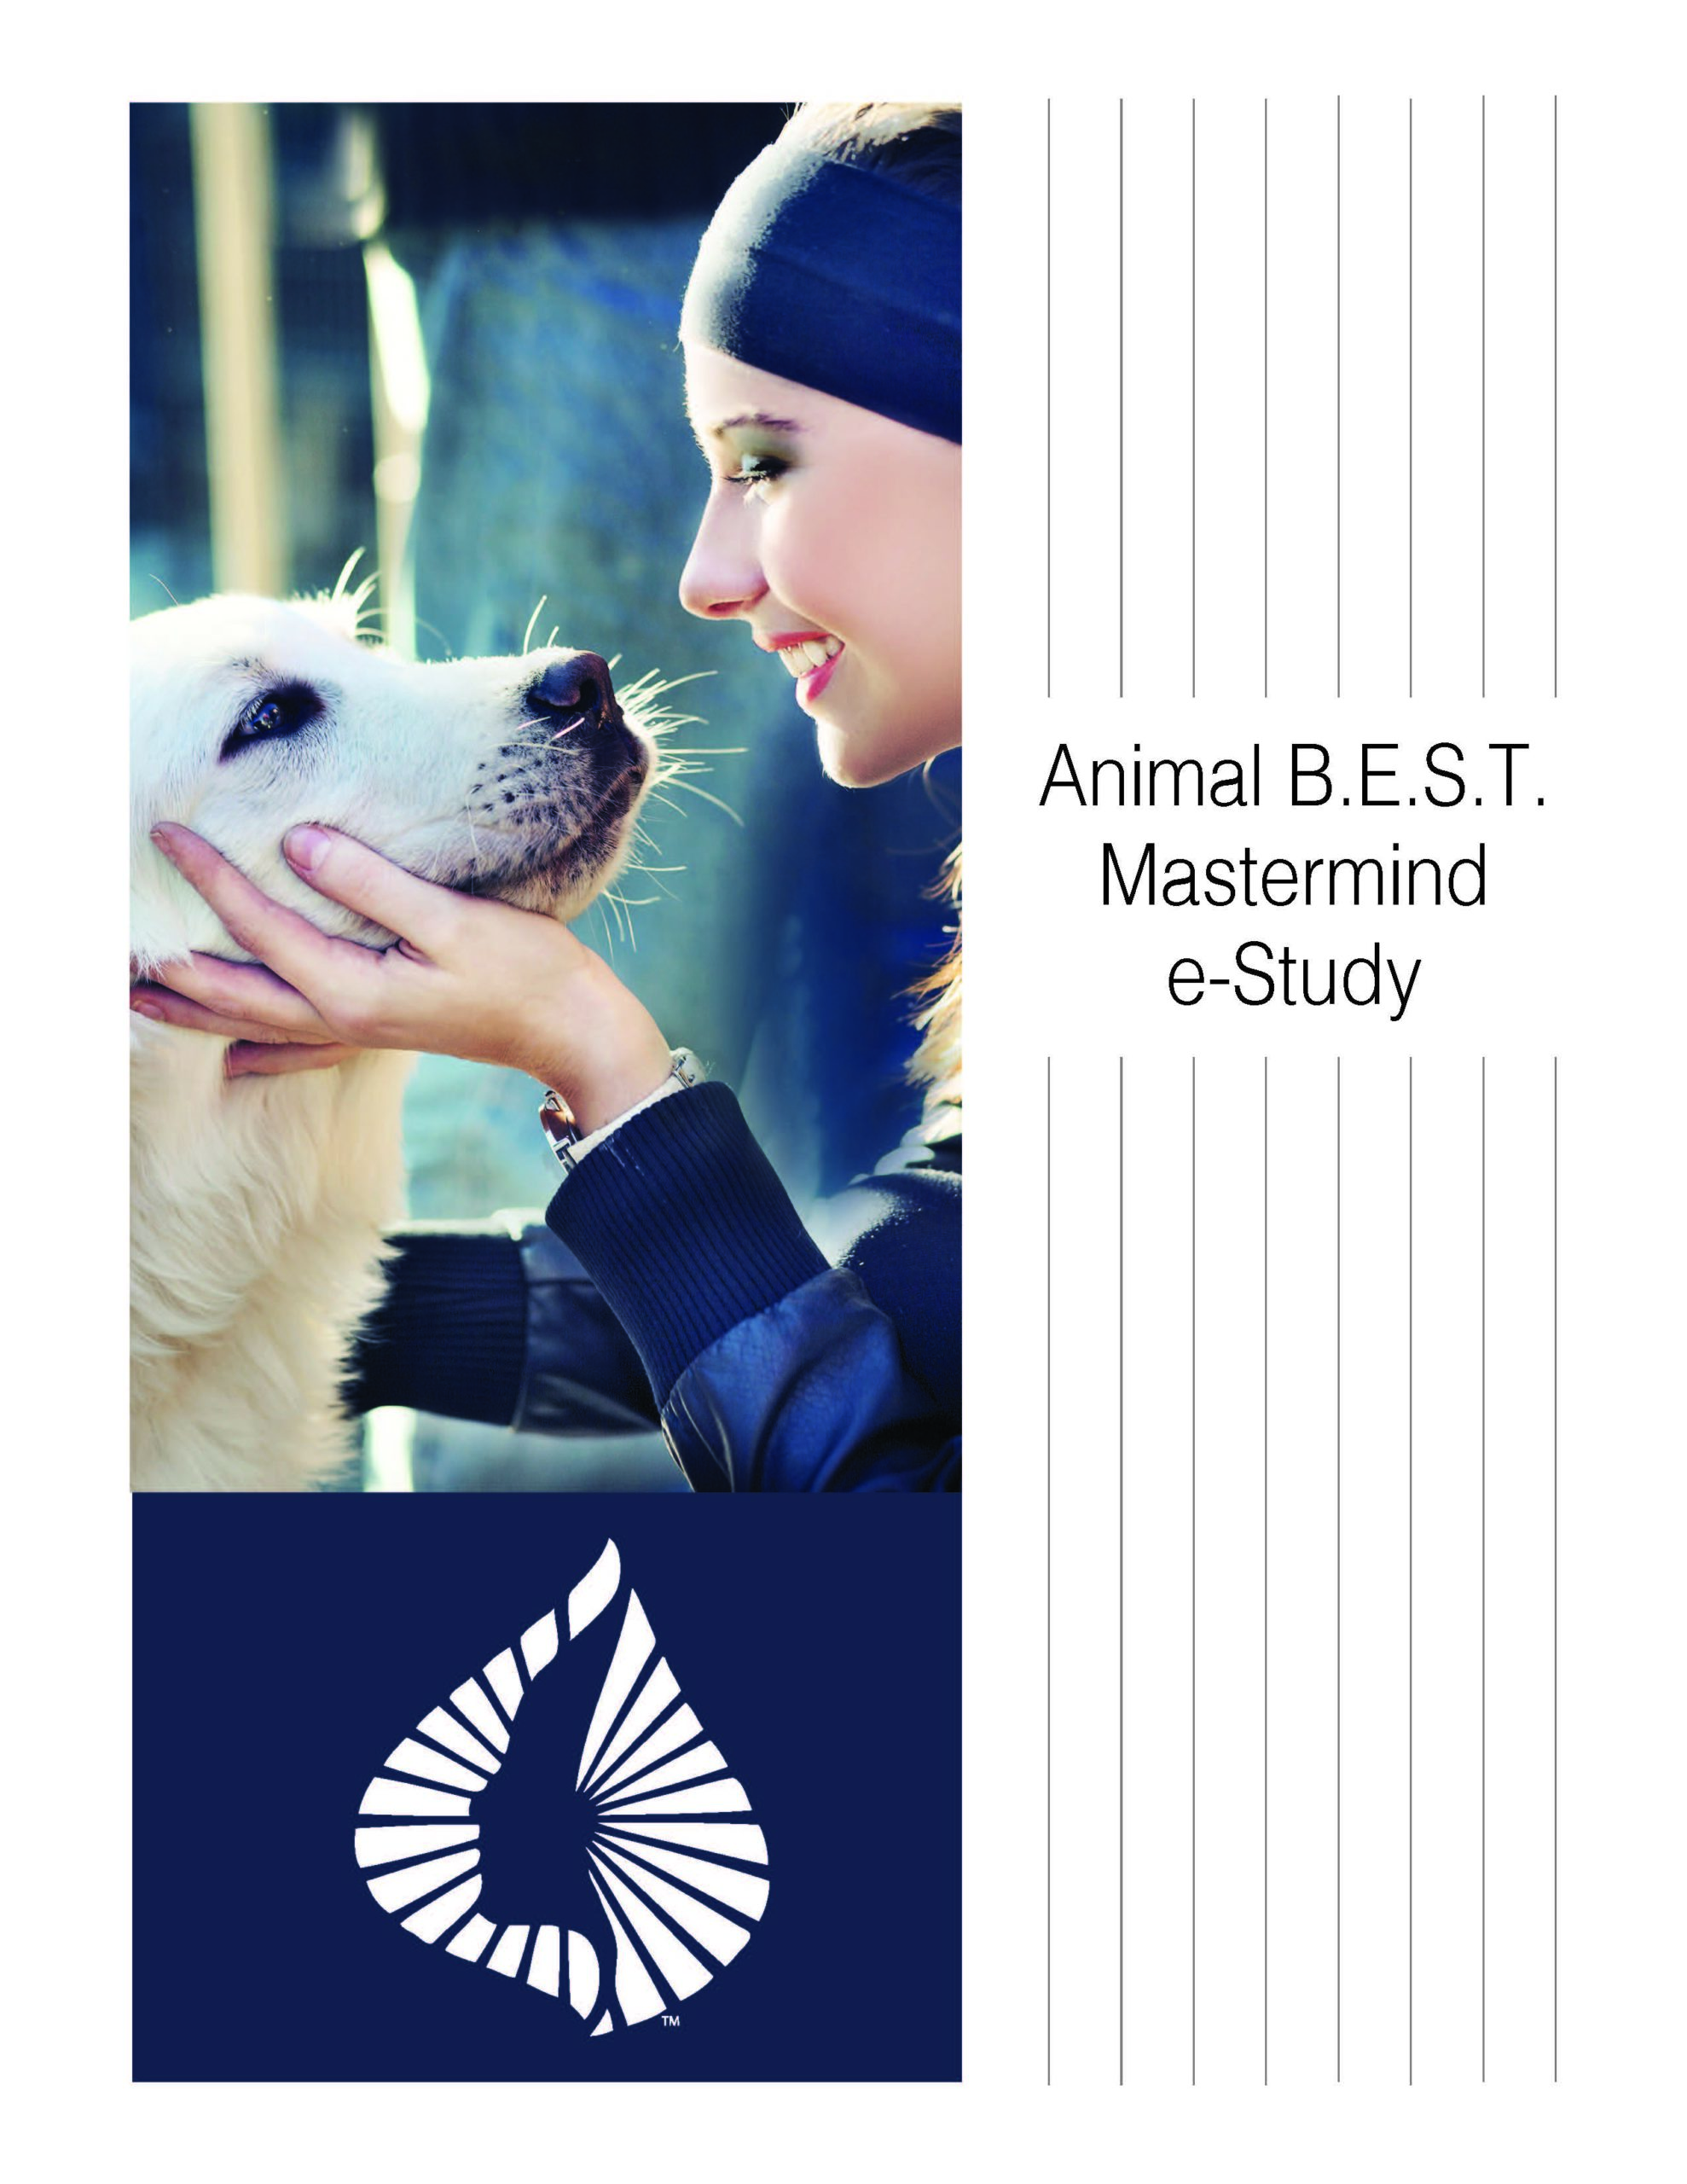 Animal B.E.S.T. Mastermind Homestudy Course